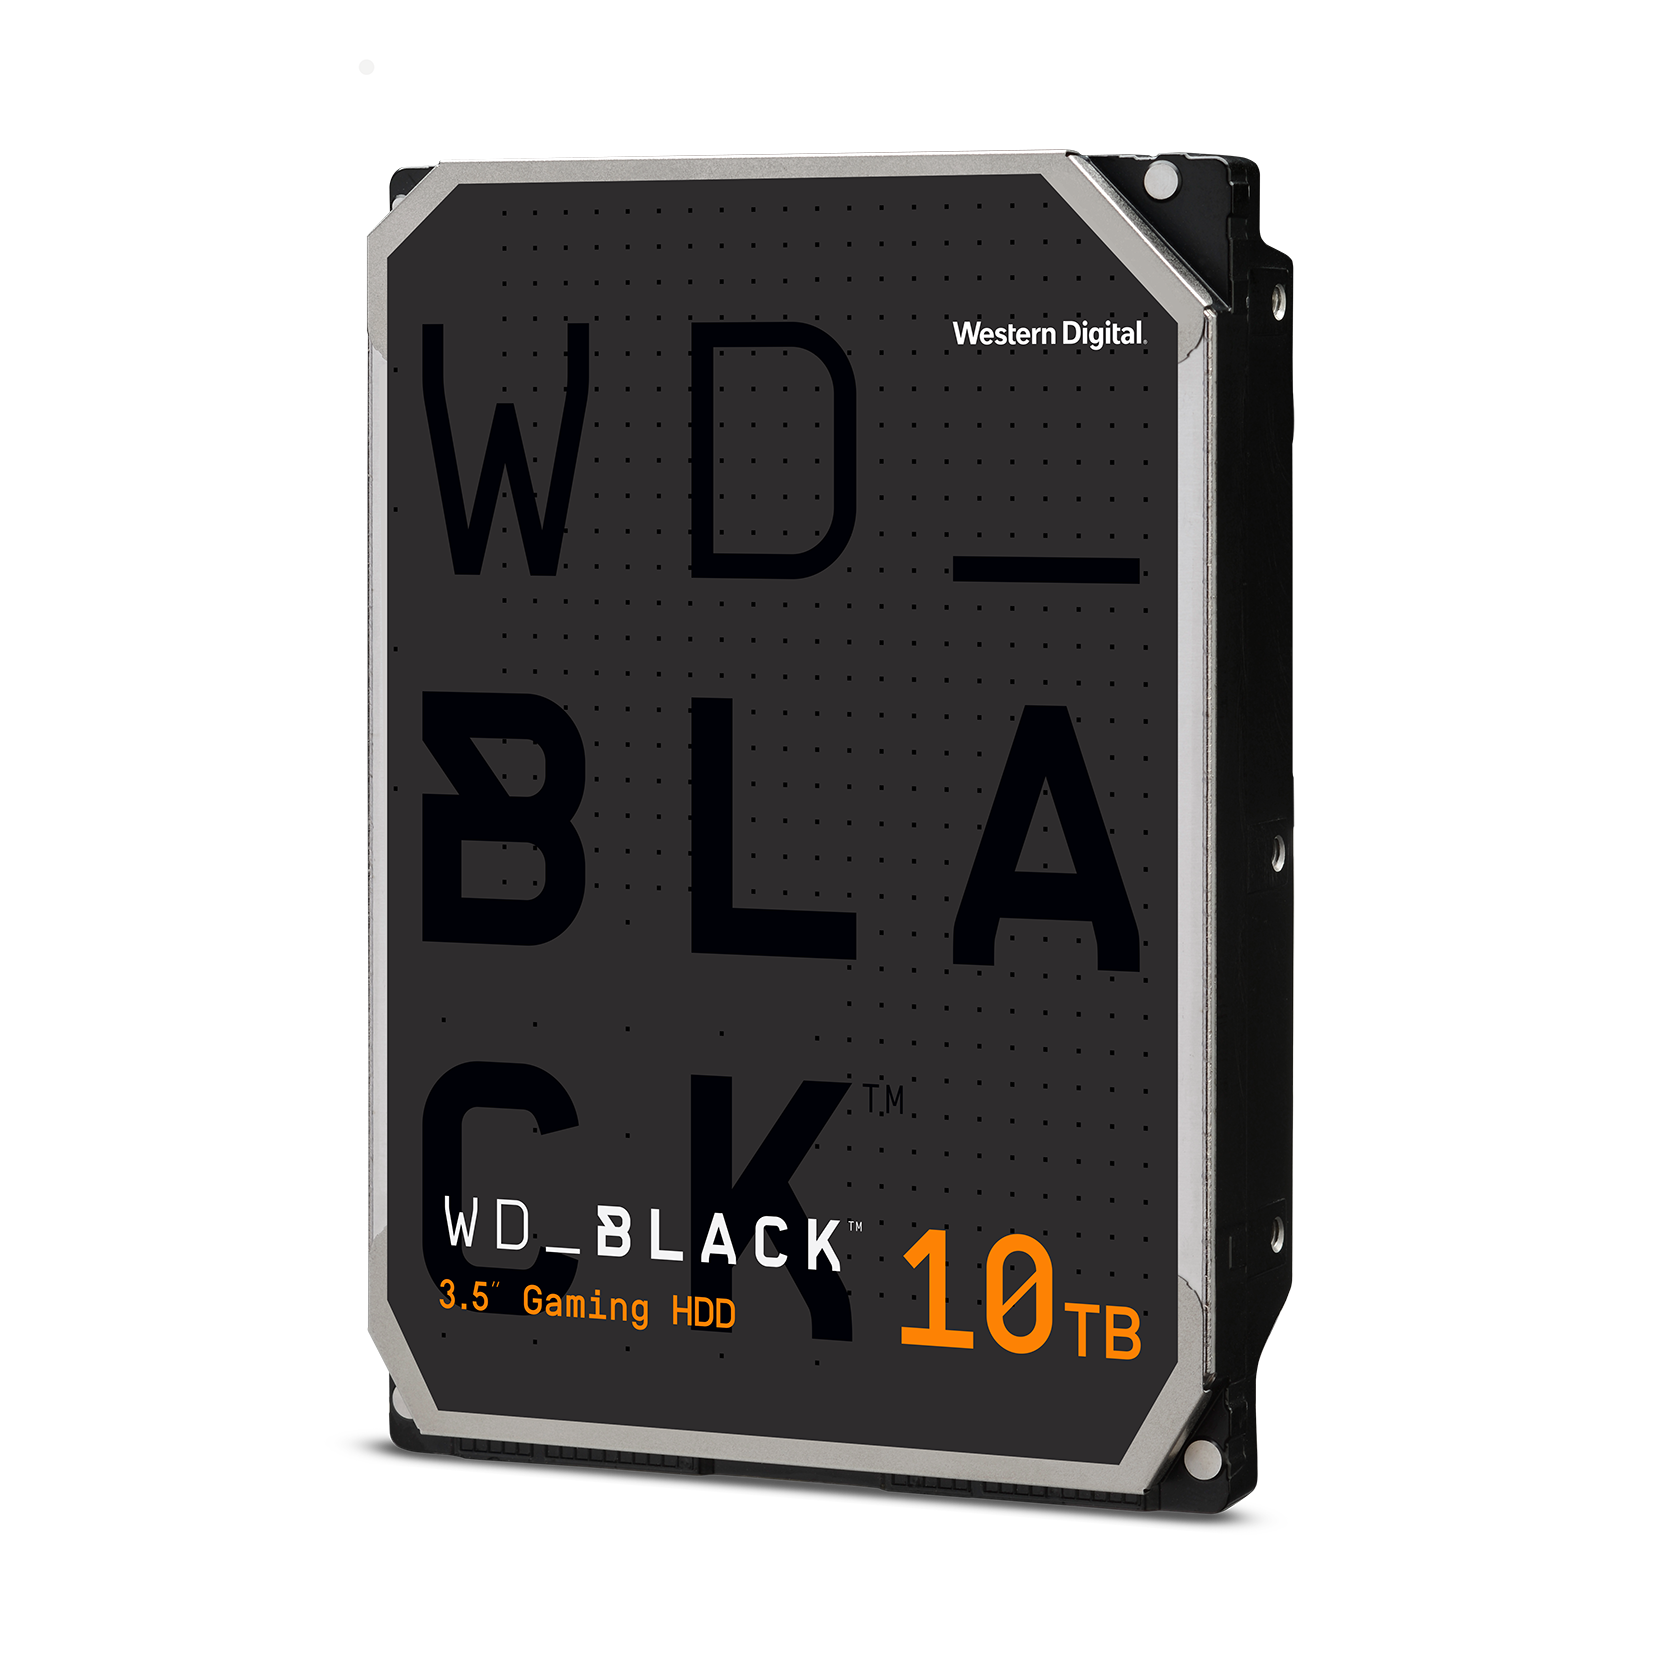 WD_BLACK 10TB 邃｢ Gaming Hard Drive - WD101FZBX